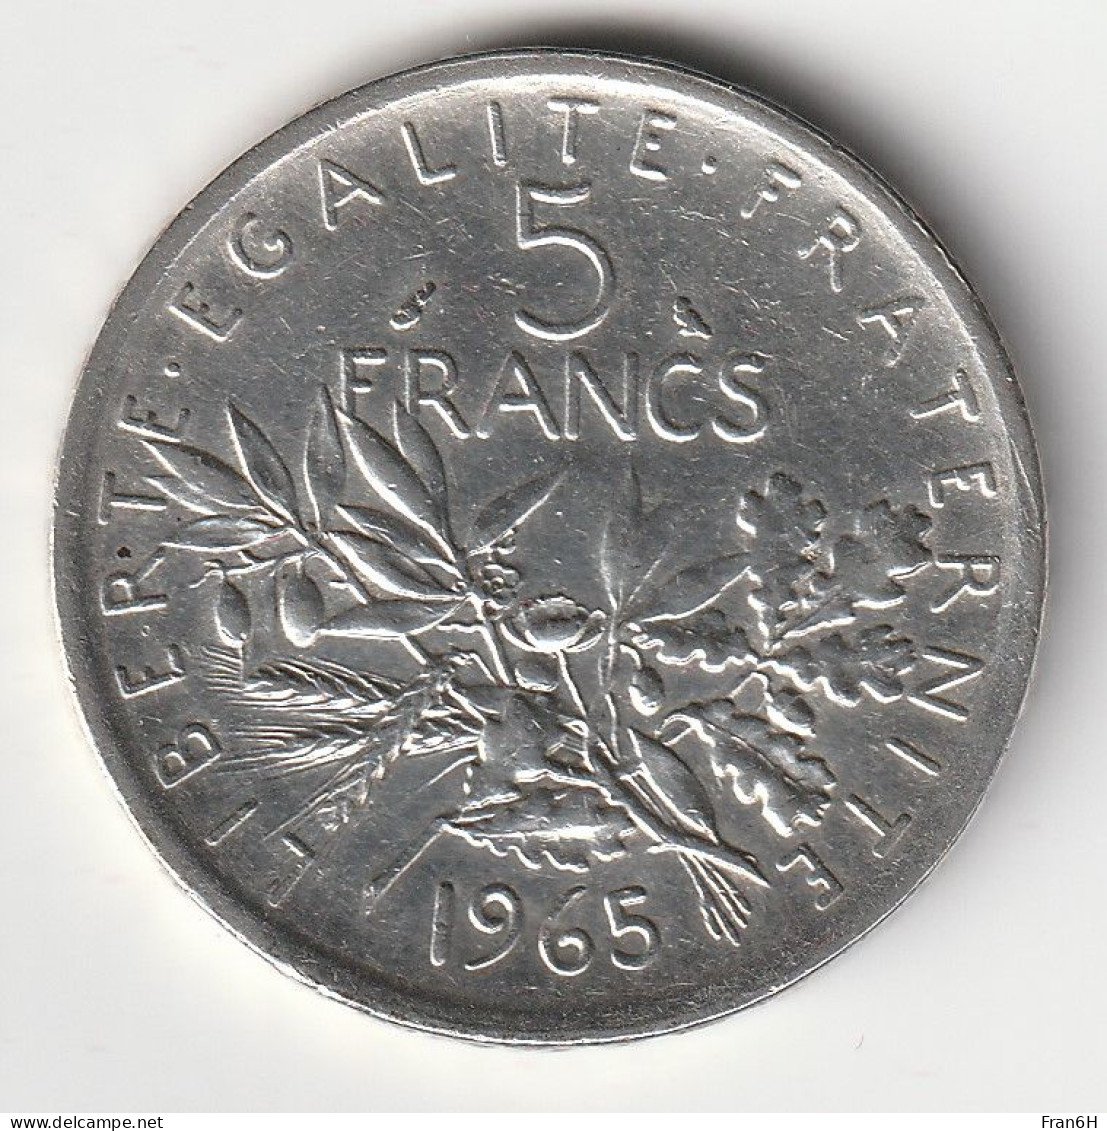 5 Francs Argent 1965 - Silver - - 5 Francs